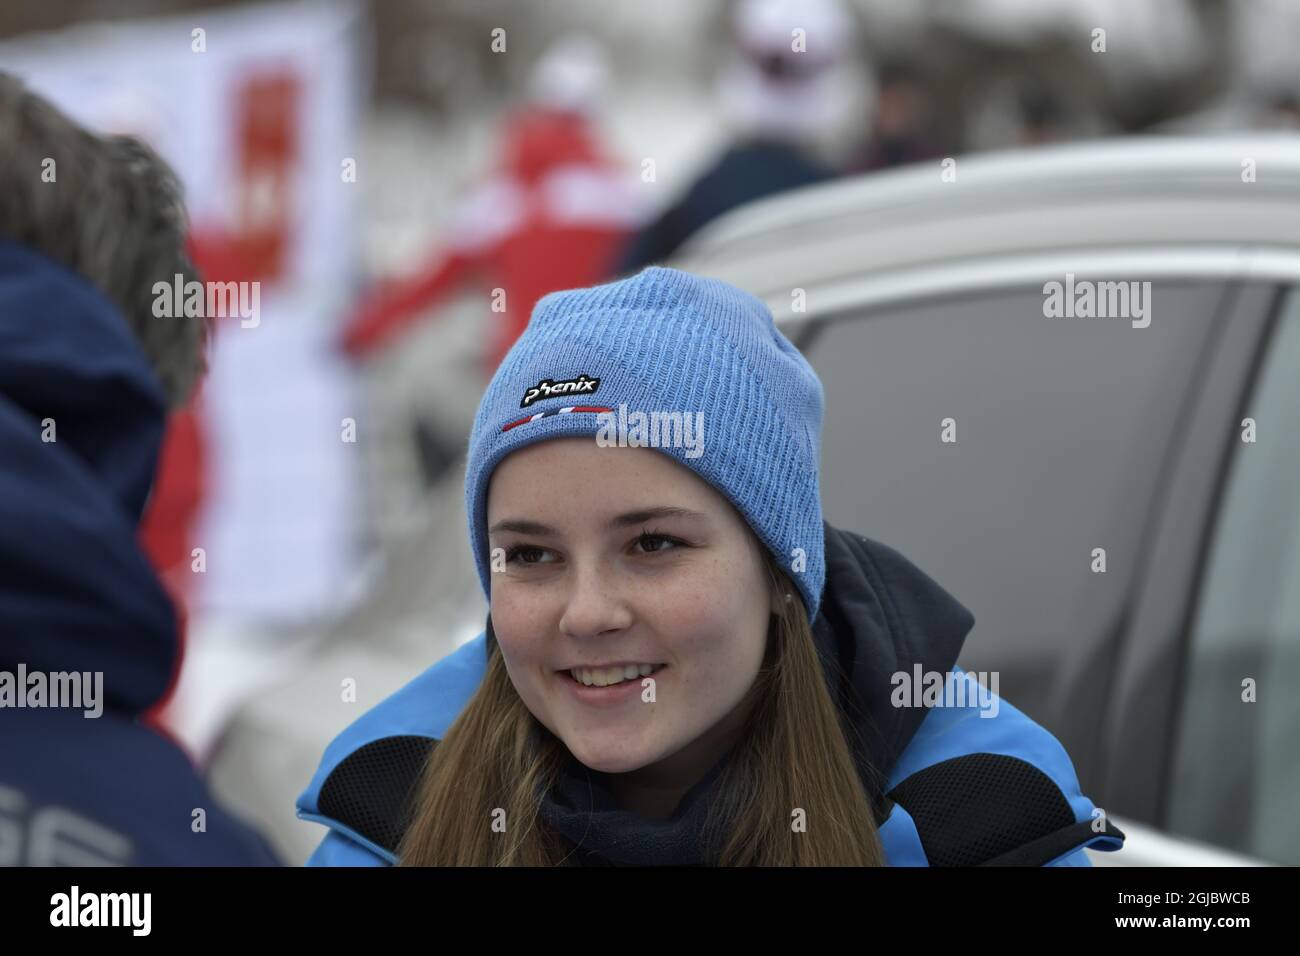 Princess Ingrid-Alexandra of Norway during the WC Alpine in Are Sweden on February 9, 2019 Foto: Pontus Lundahl / TT / kod 10050  Stock Photo